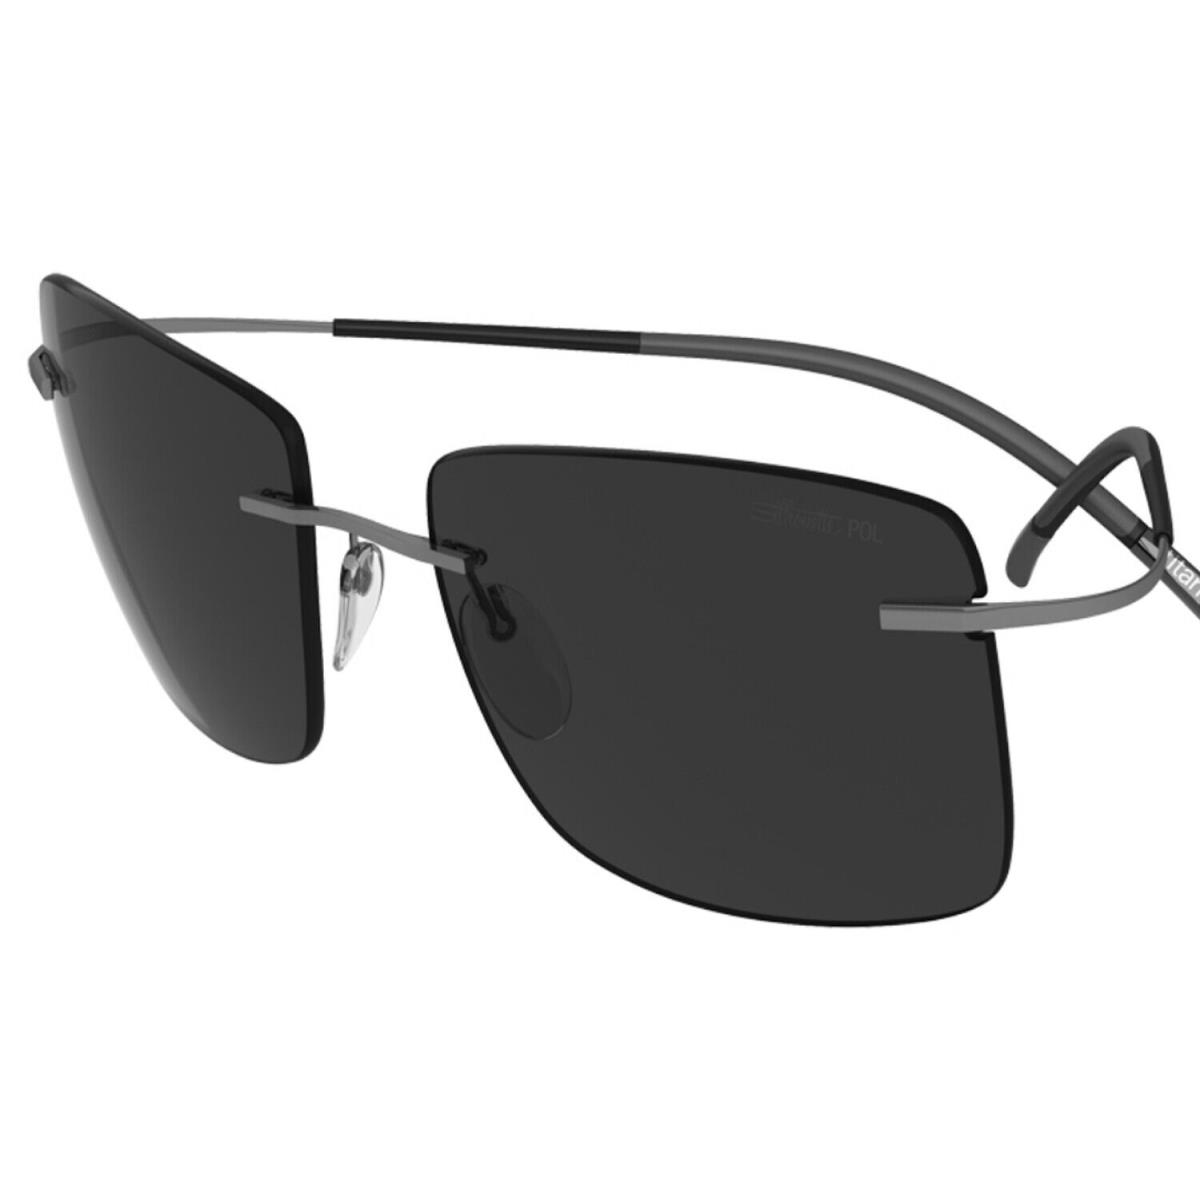 Silhouette Sunglasses Tma Icon 59/18/138 Grey Polarized 8691/60-6200